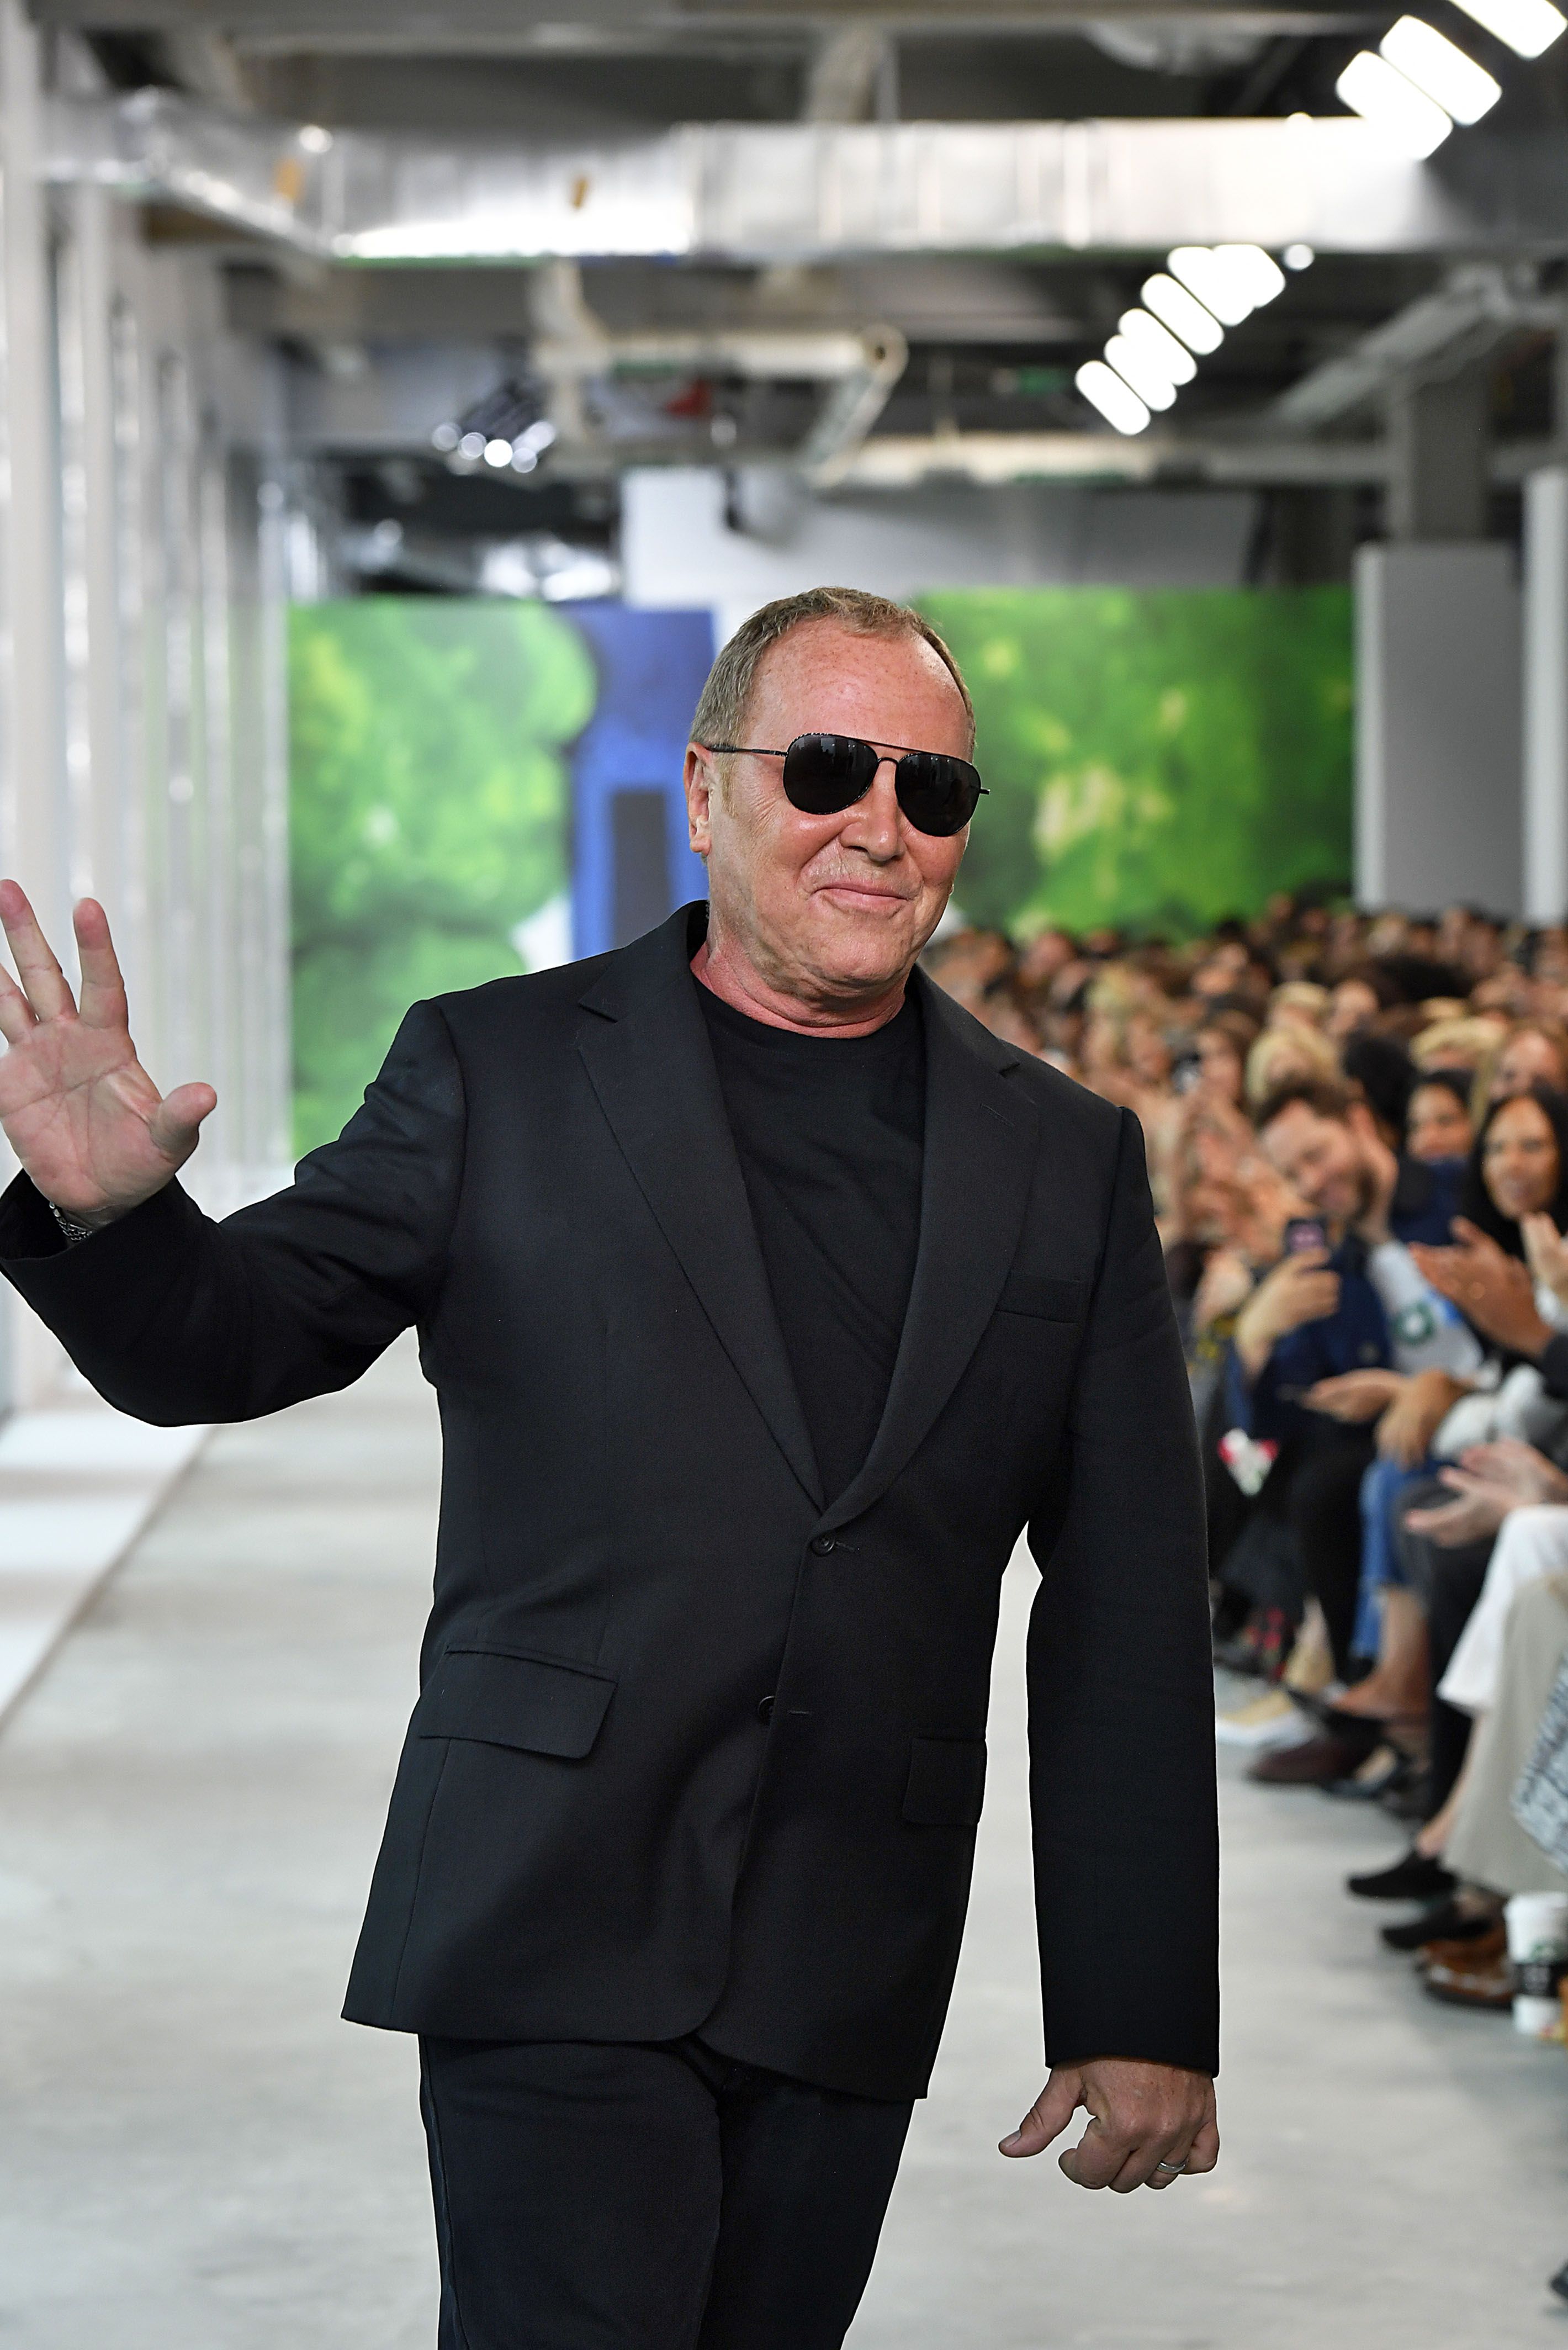 Fashion designer Michael Kors makes Times Most Influential list  EWcom